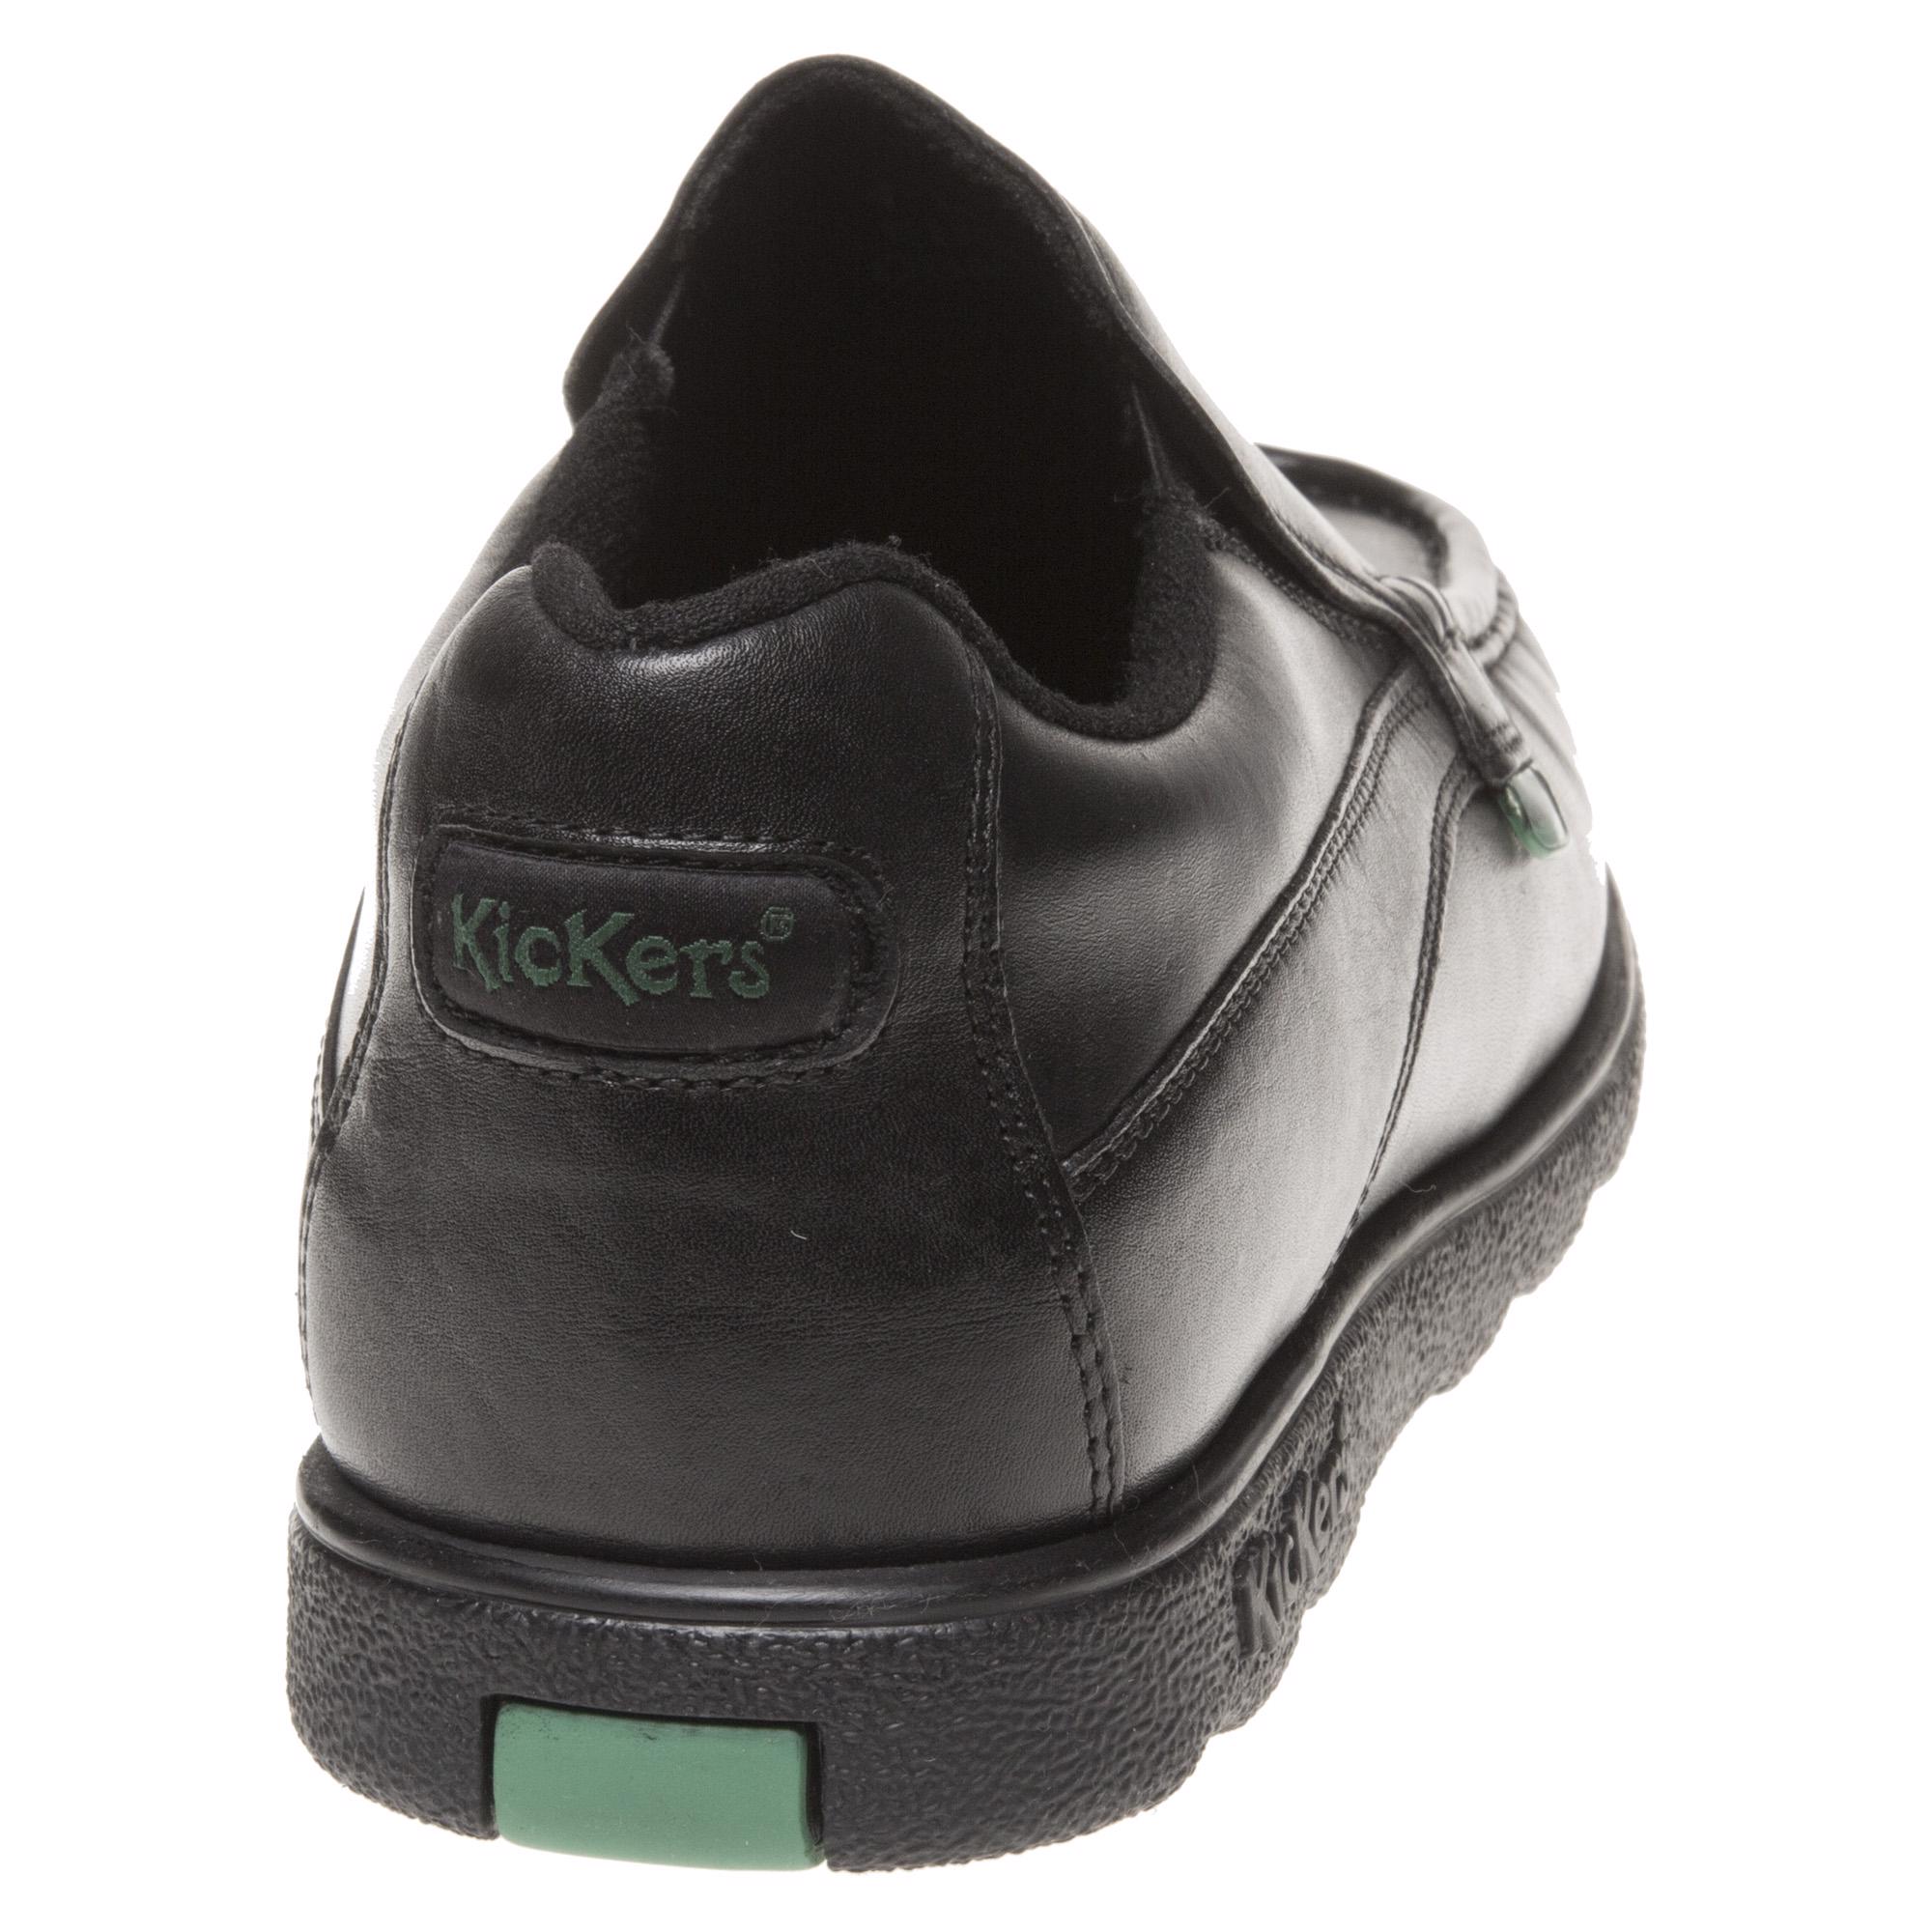 KICKERS Mens Fragma Slip On School Shoes Black